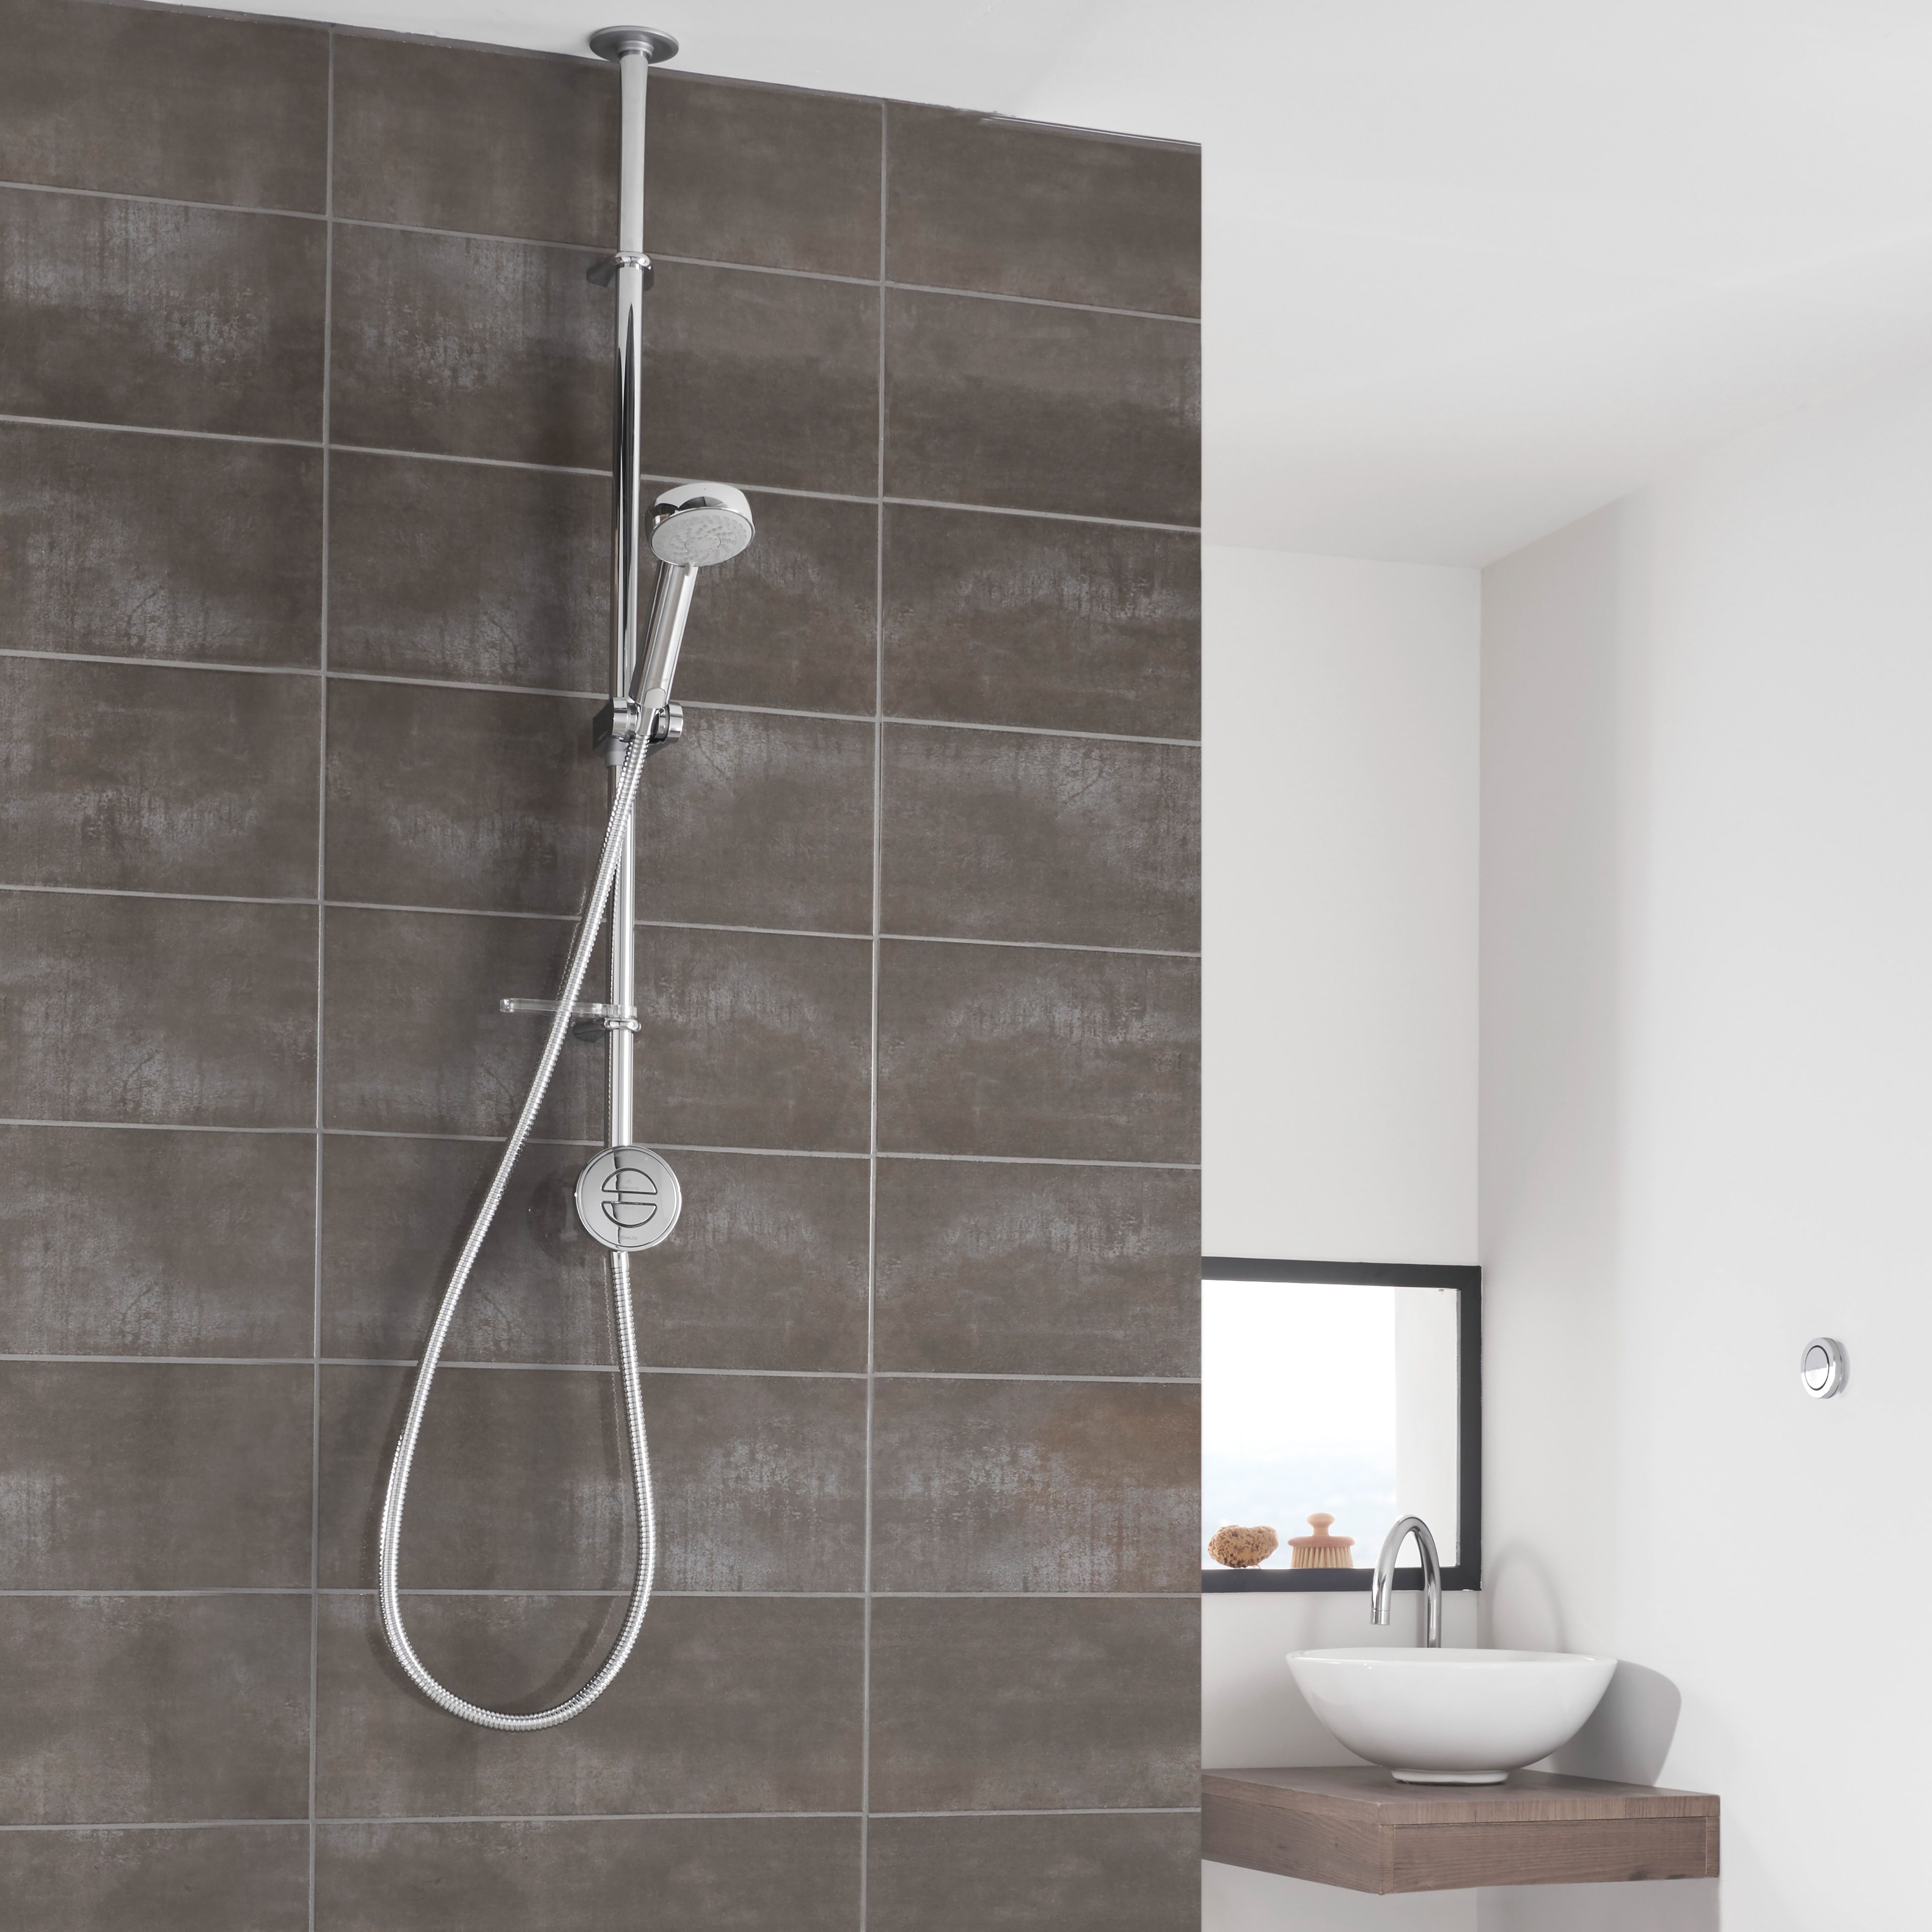 Aqualisa Smart Link Exposed valve Gravity-pumped Ceiling fed Smart Digital Shower with Adjustable shower head